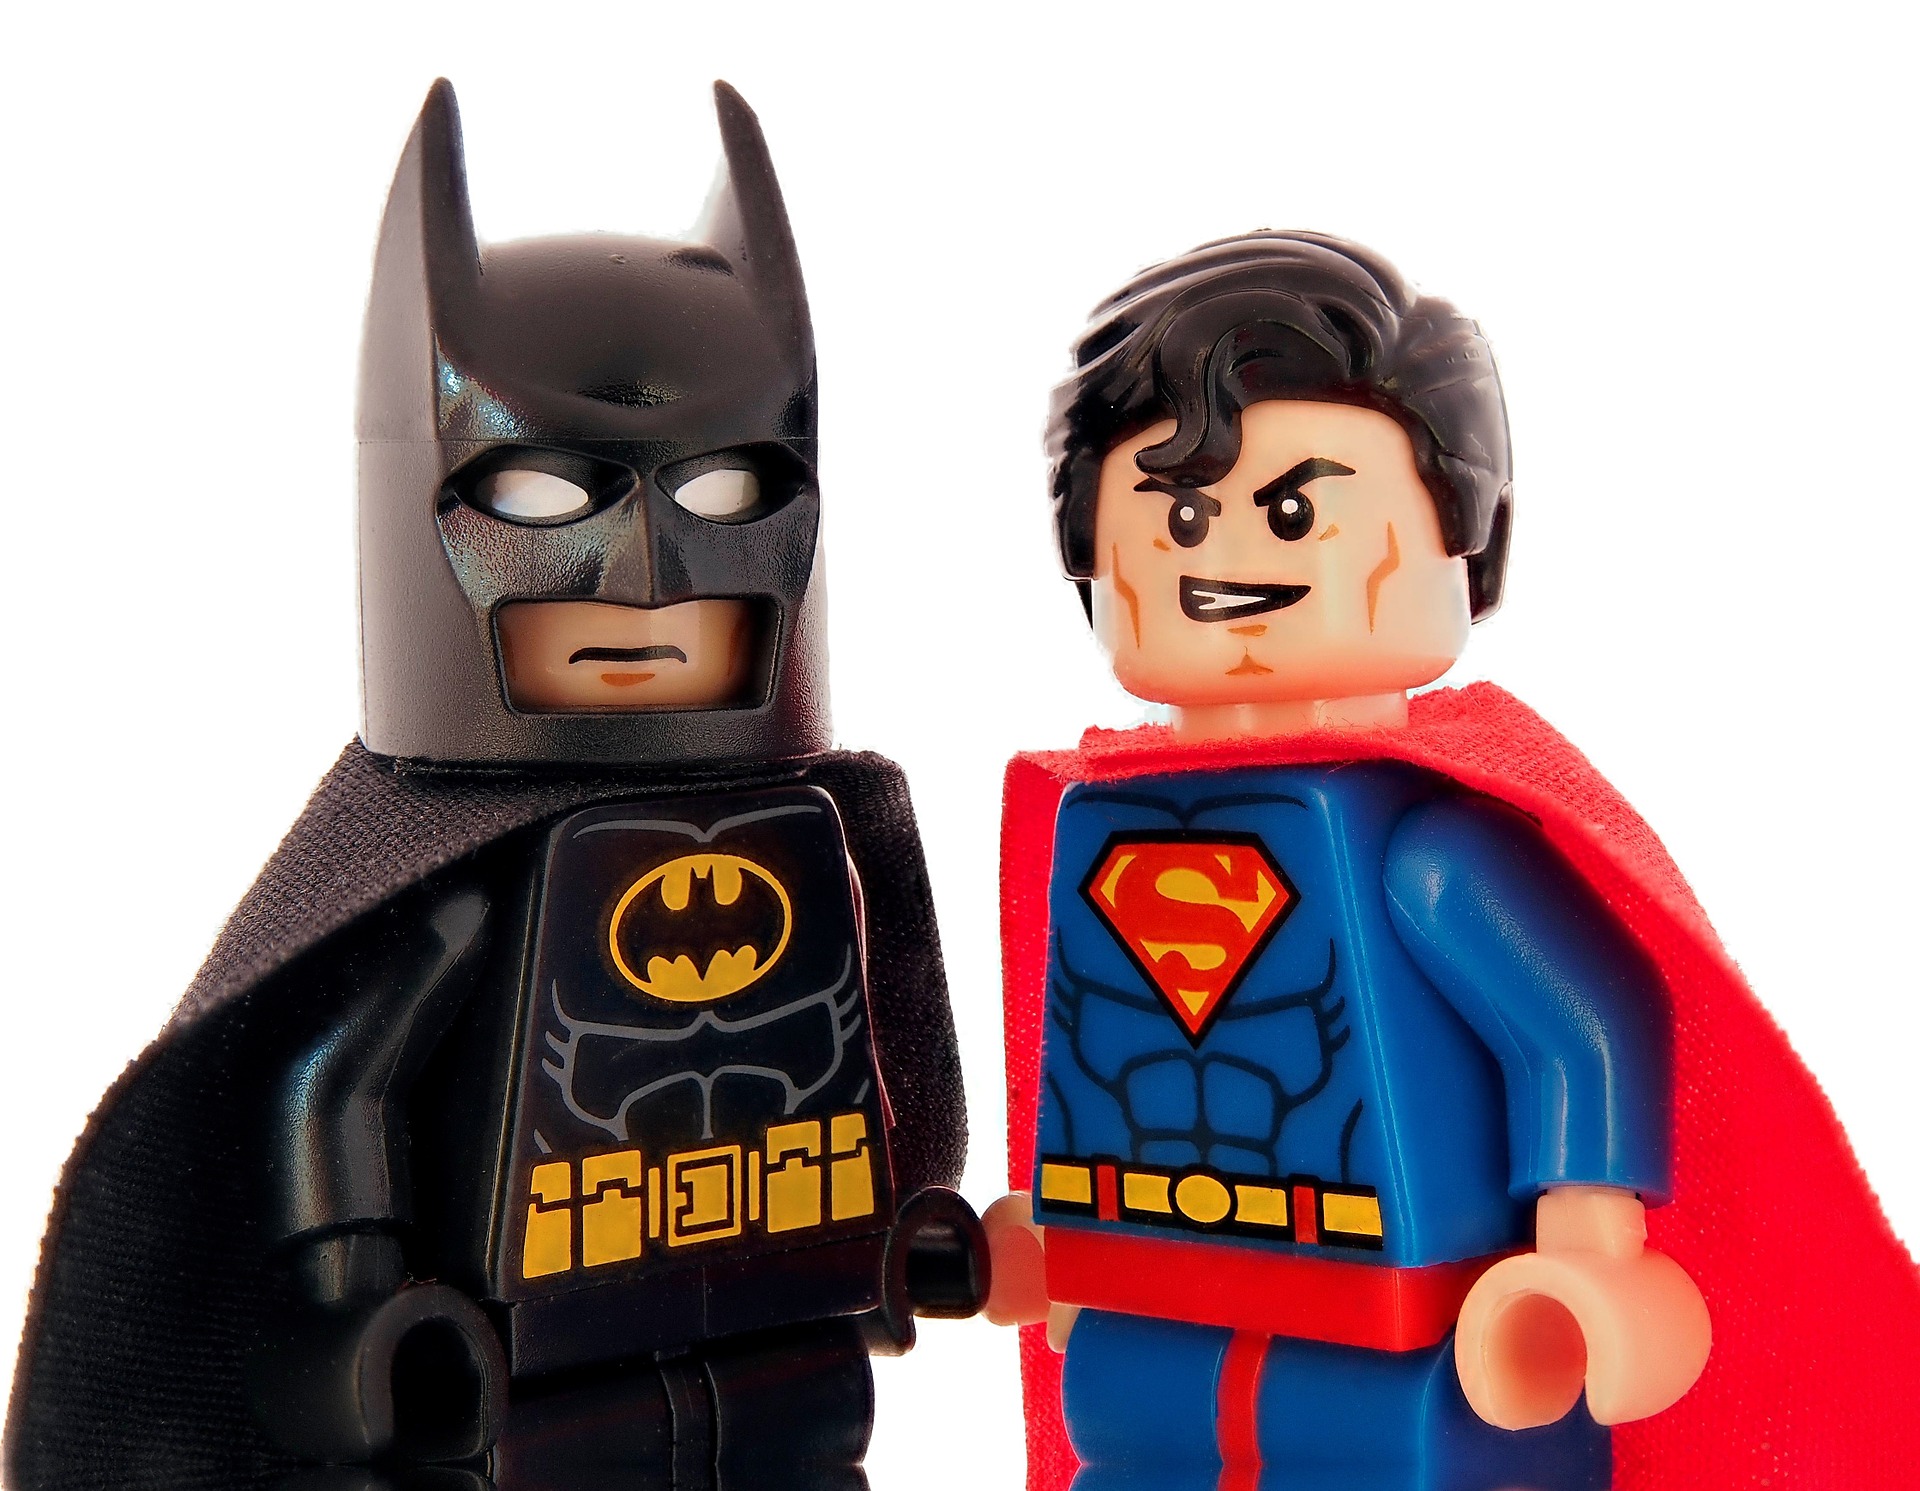 Lego figurines of Batman and Superman